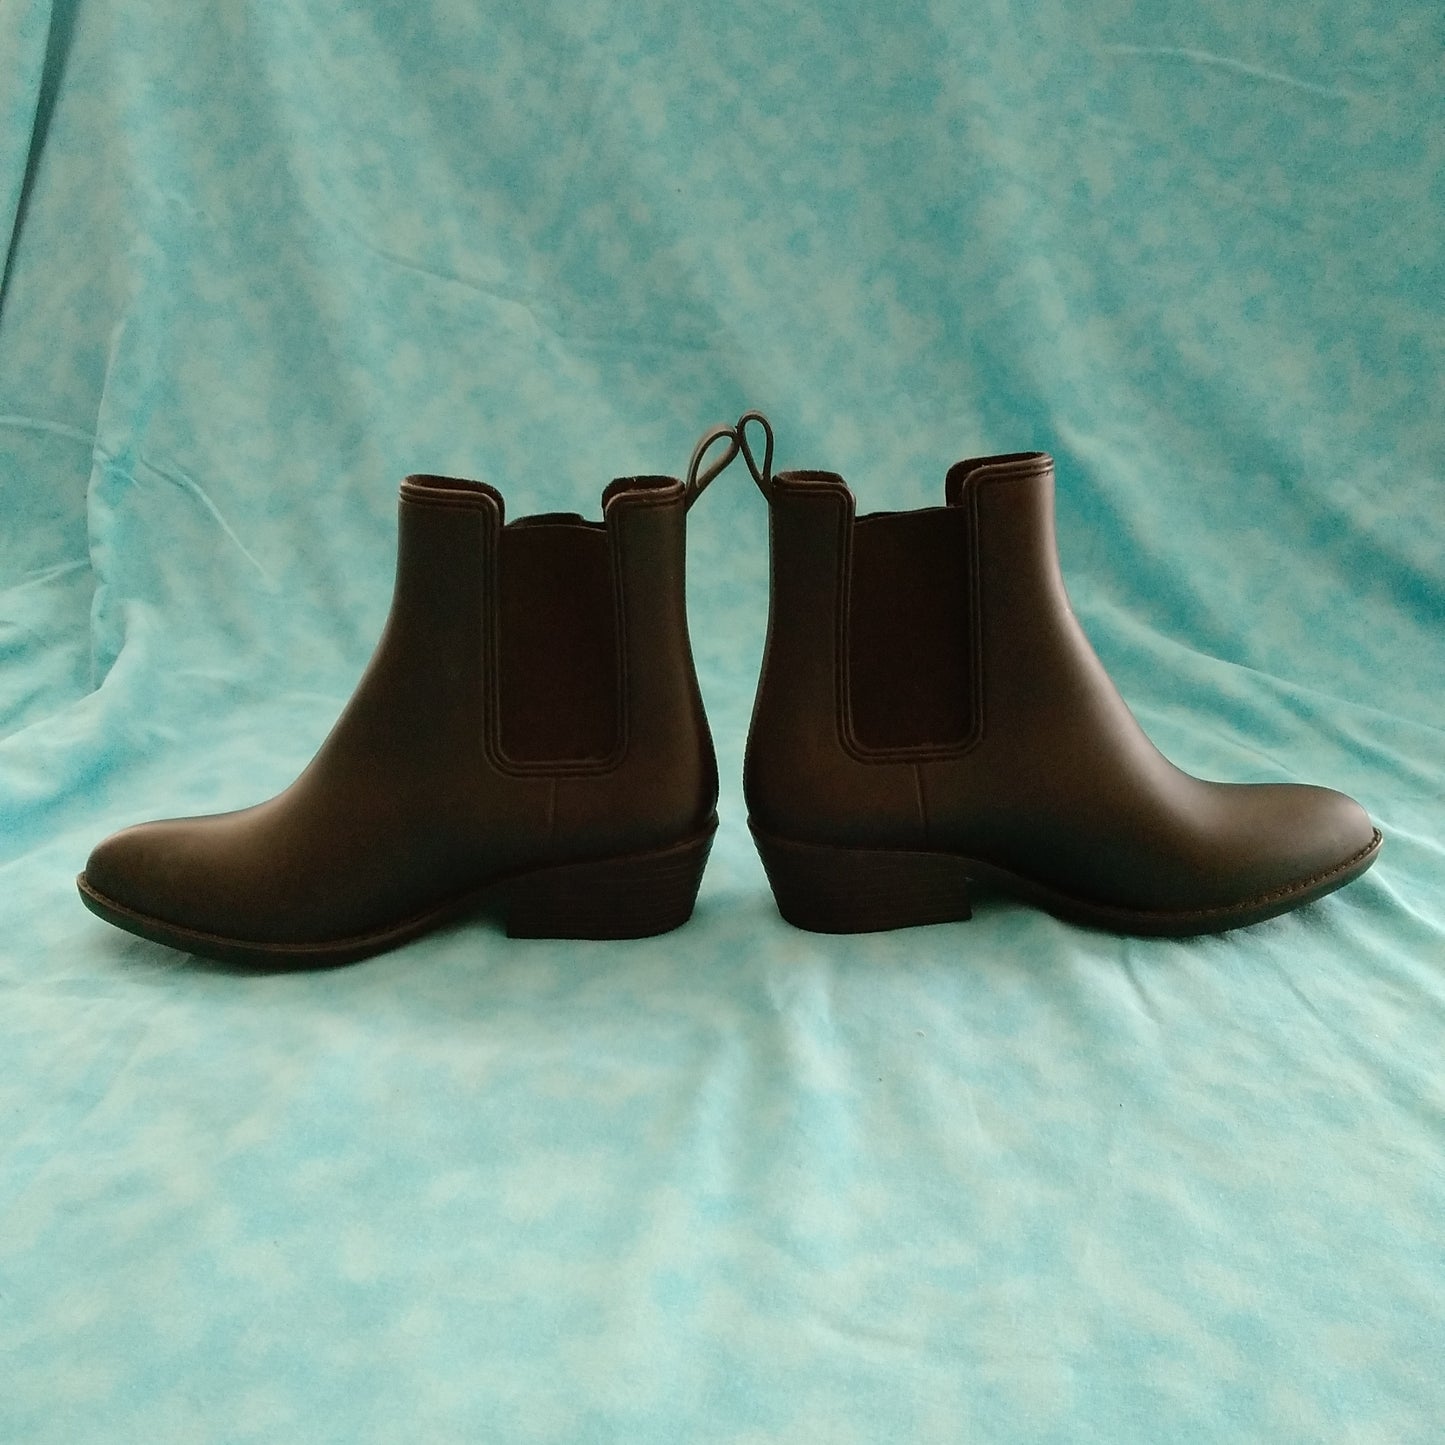 Jeffrey Campbell Black Havana Last Chelsea Rain Boots - Size: 8